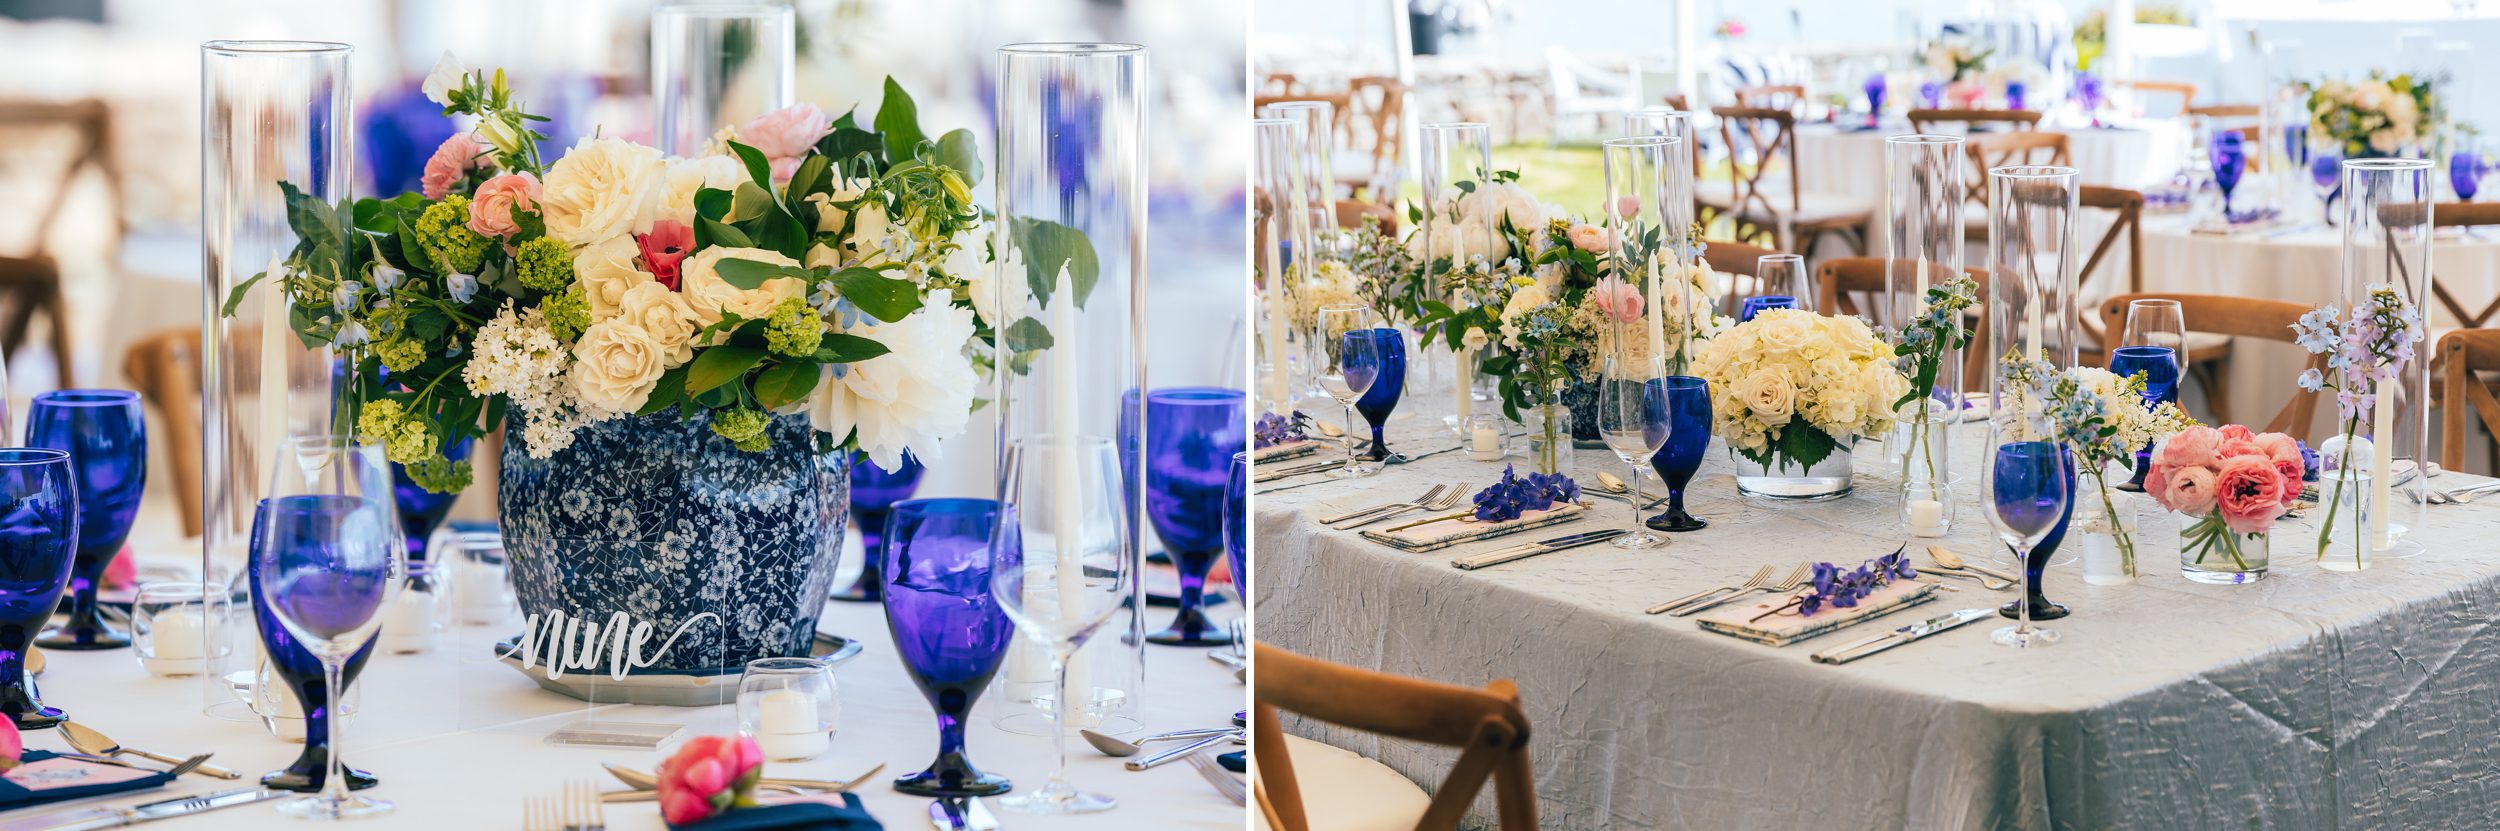 wedding reception table displays